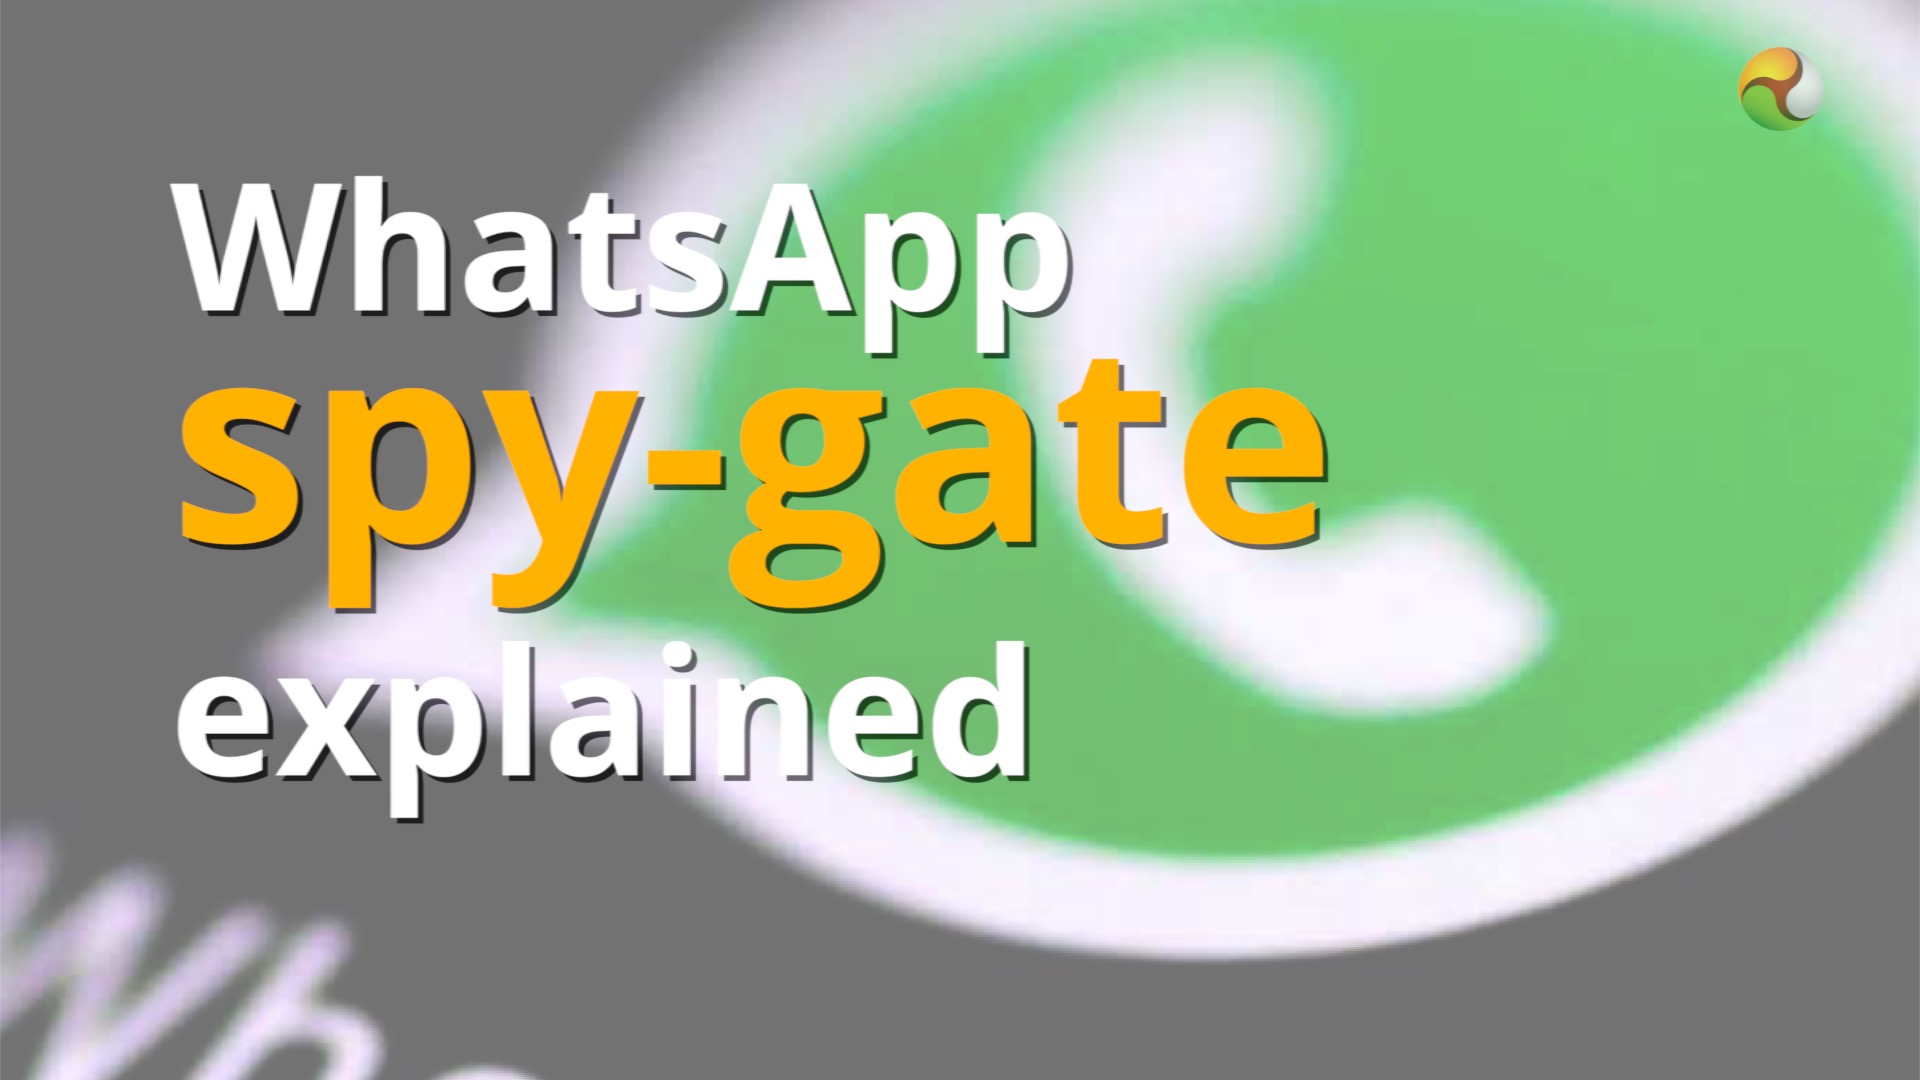 WhatsApp spy-gate explained